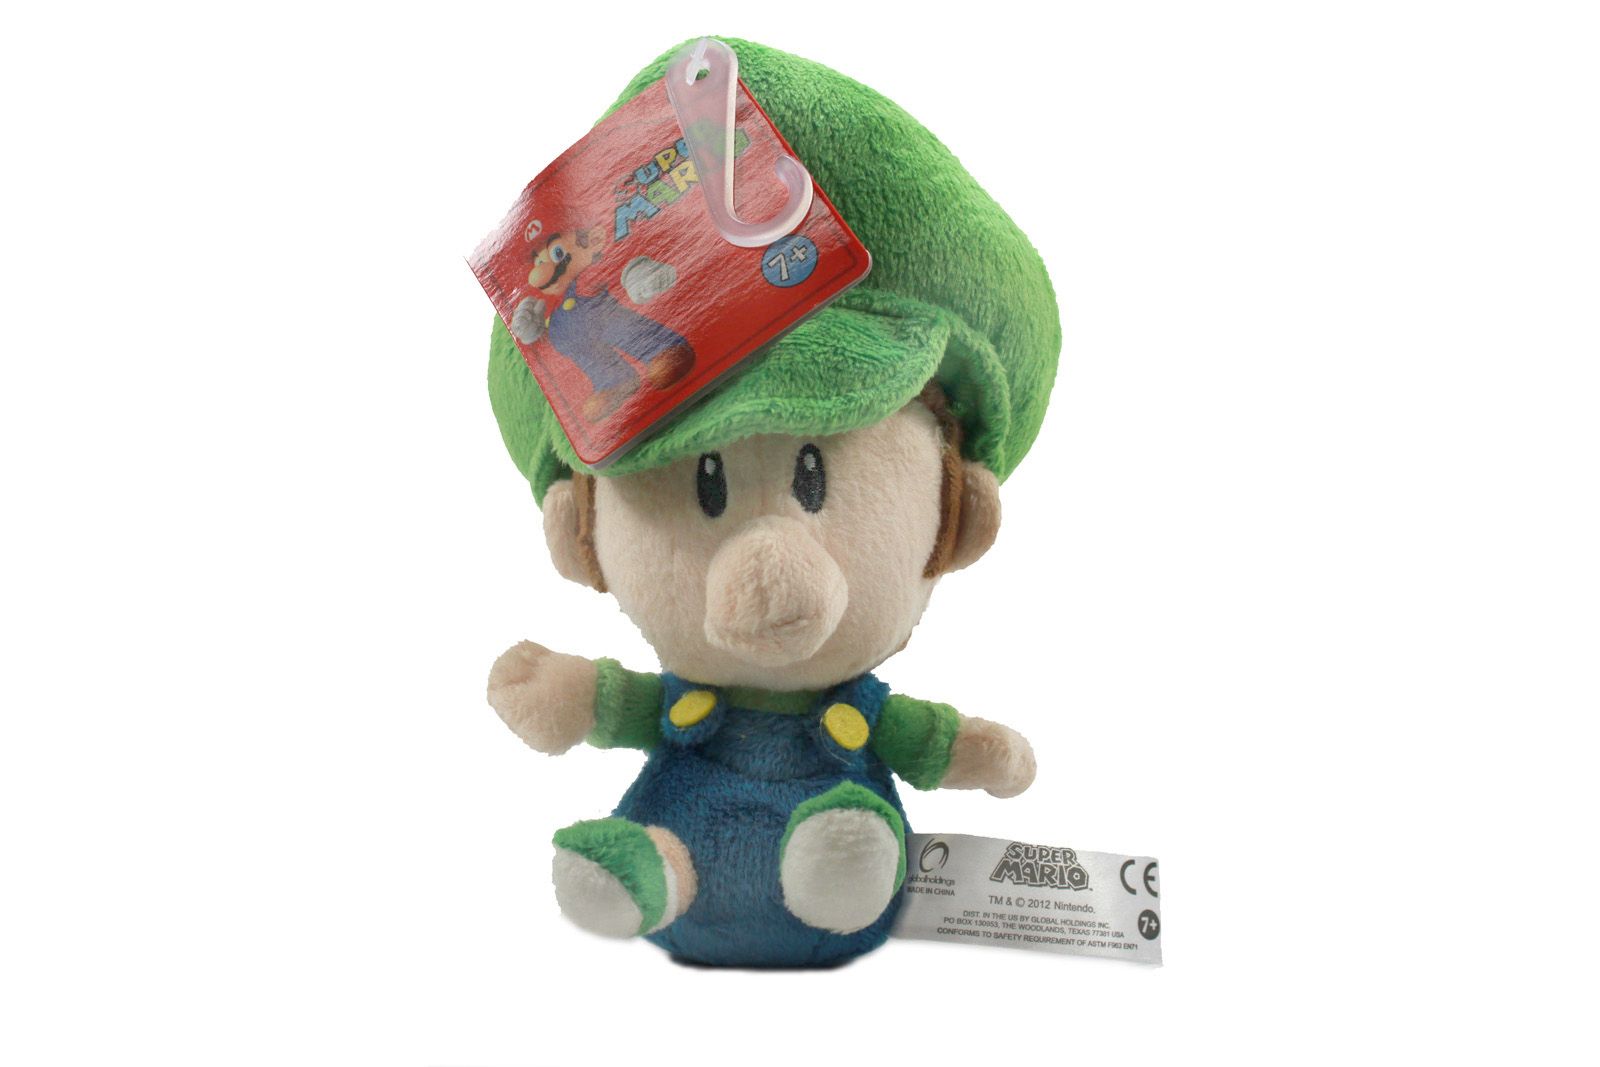   Brand New Global Holdings Super Mario Plush   5 Baby Luigi Stuffed